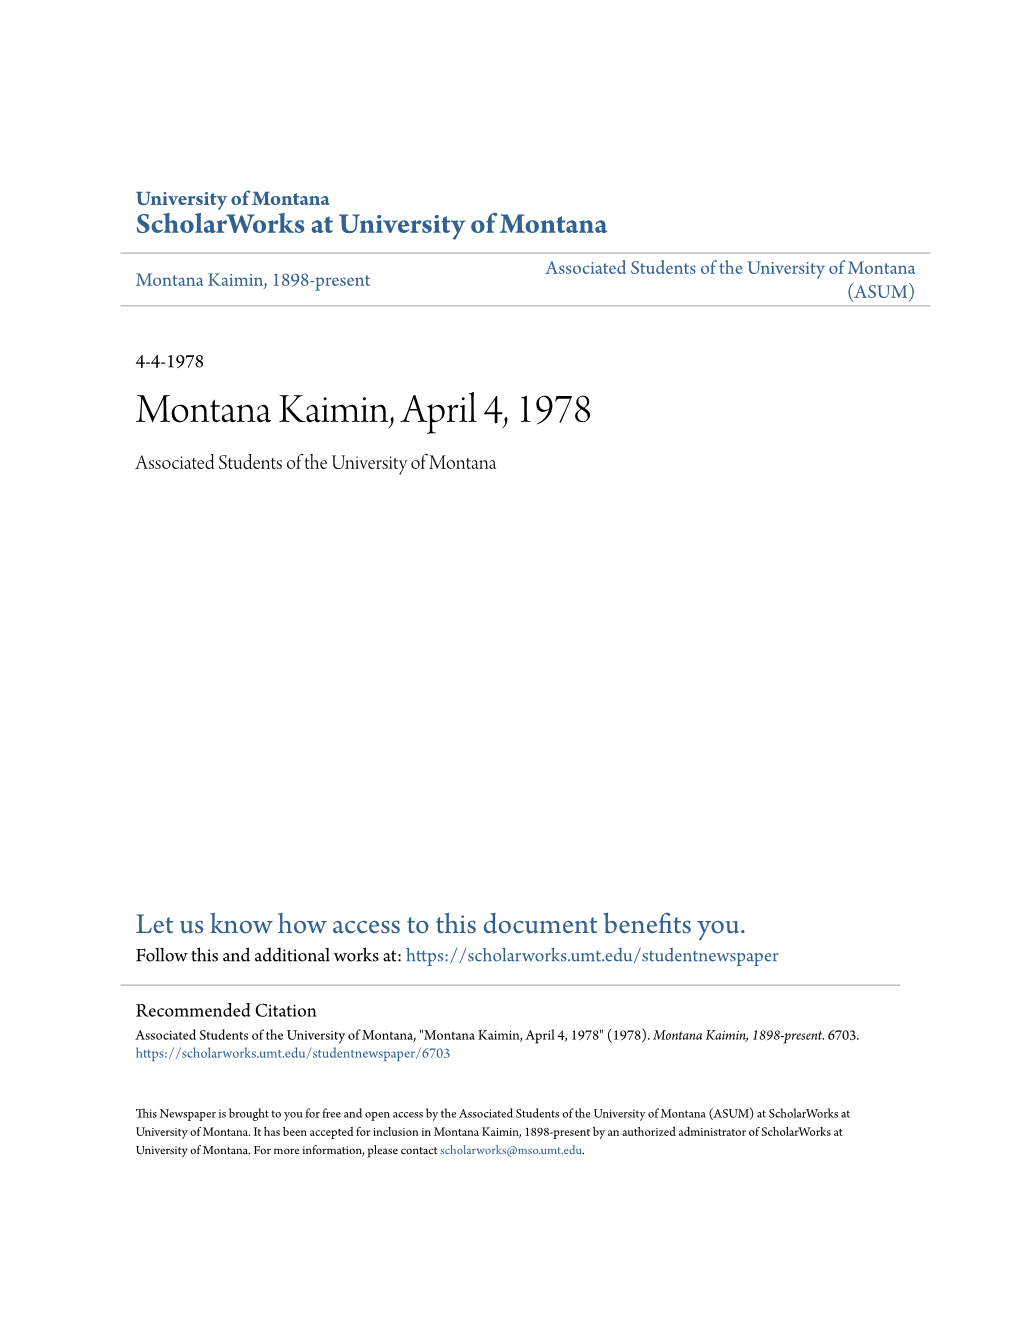 Montana Kaimin, April 4, 1978 Associated Students of the University of Montana